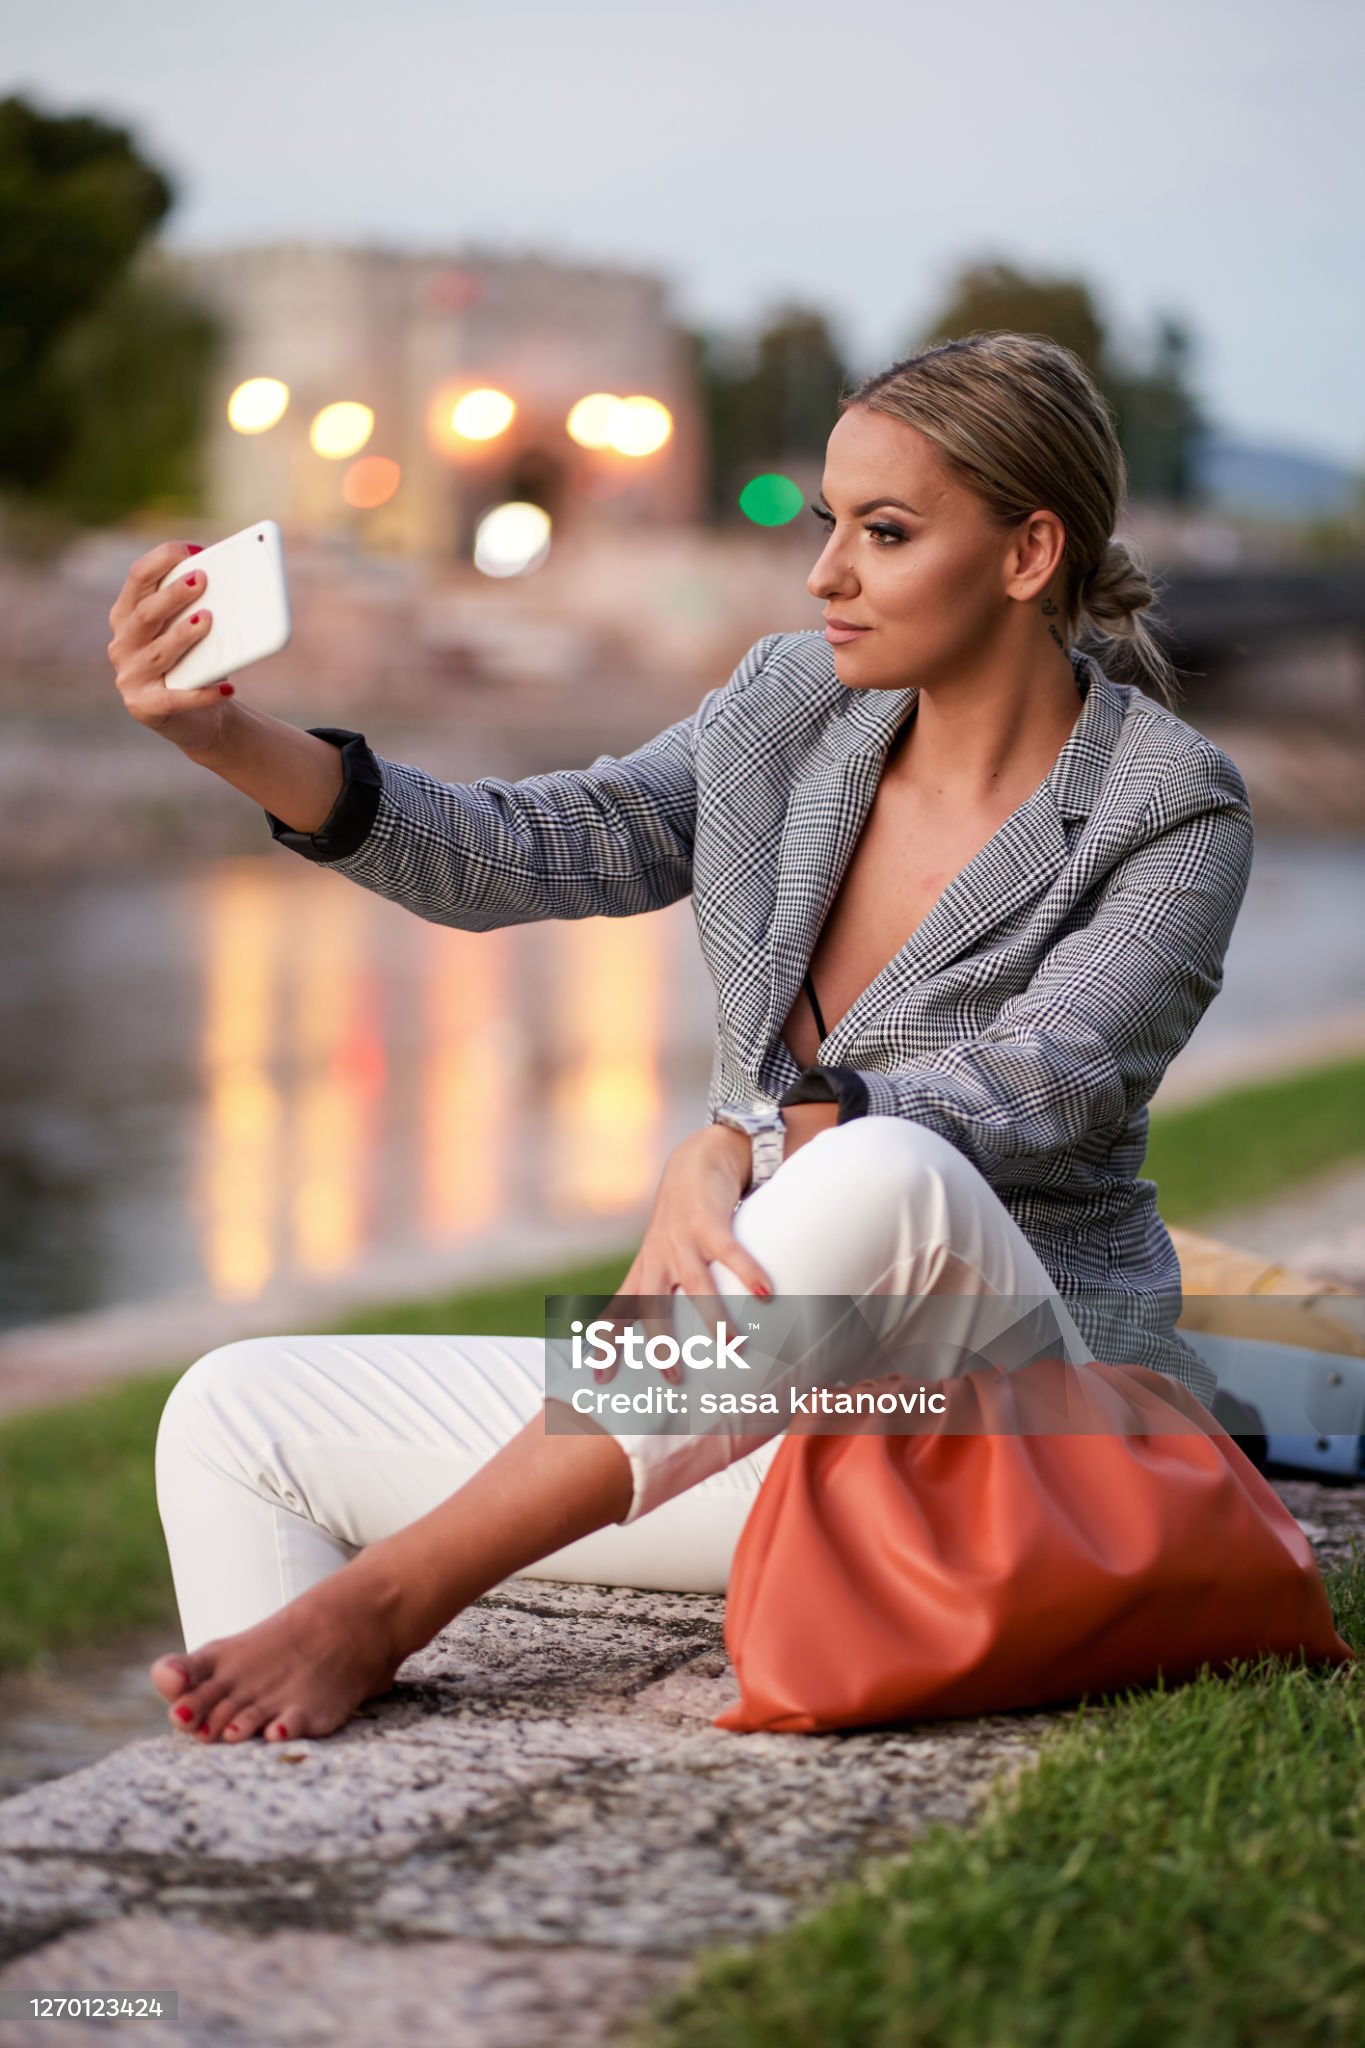 https://media.istockphoto.com/id/1270123424/photo/blonde-woman-taking-a-selfie.jpg?s=2048x2048&amp;w=is&amp;k=20&amp;c=Vt5dxSIlrLklL0eoPRxeRpeCcfUuj7oPe_s3uhuVQQg=